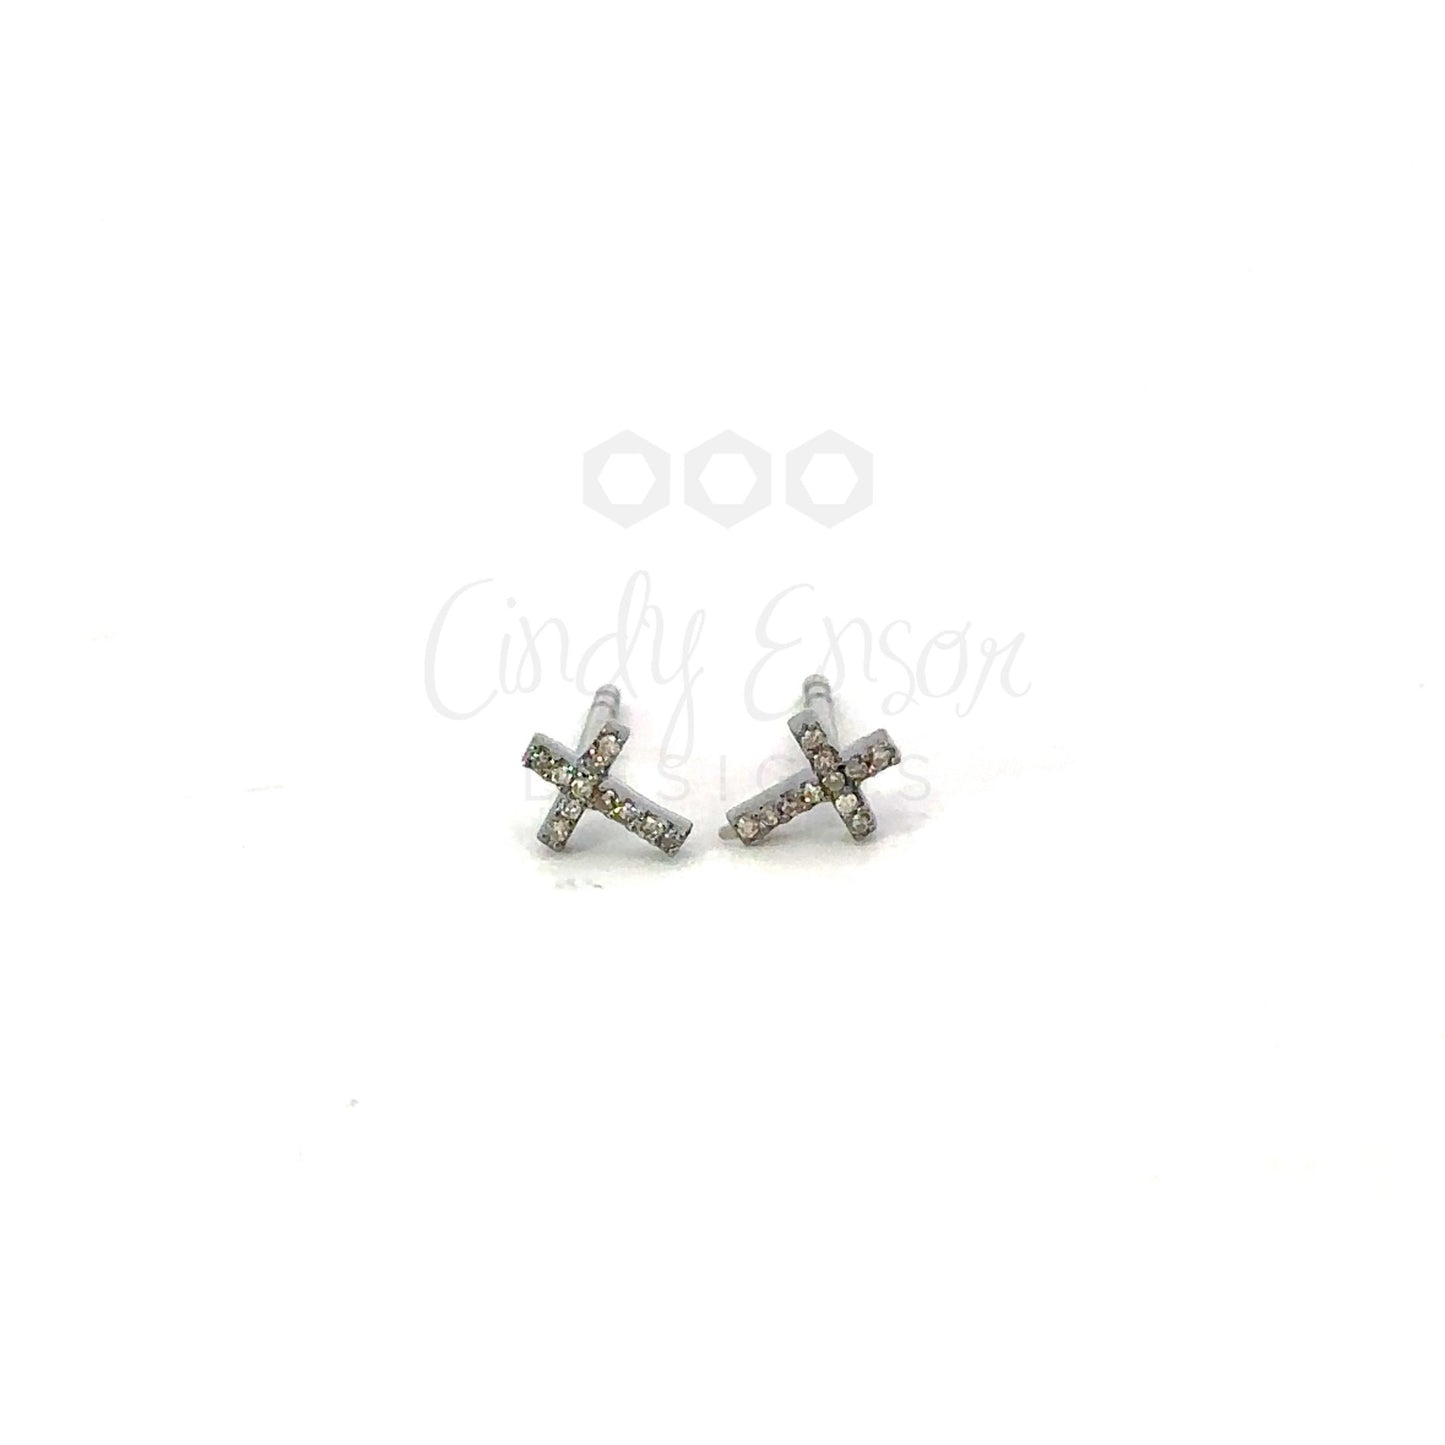 Tiny Sterling Silver Pave Diamond Cross Stud Earring